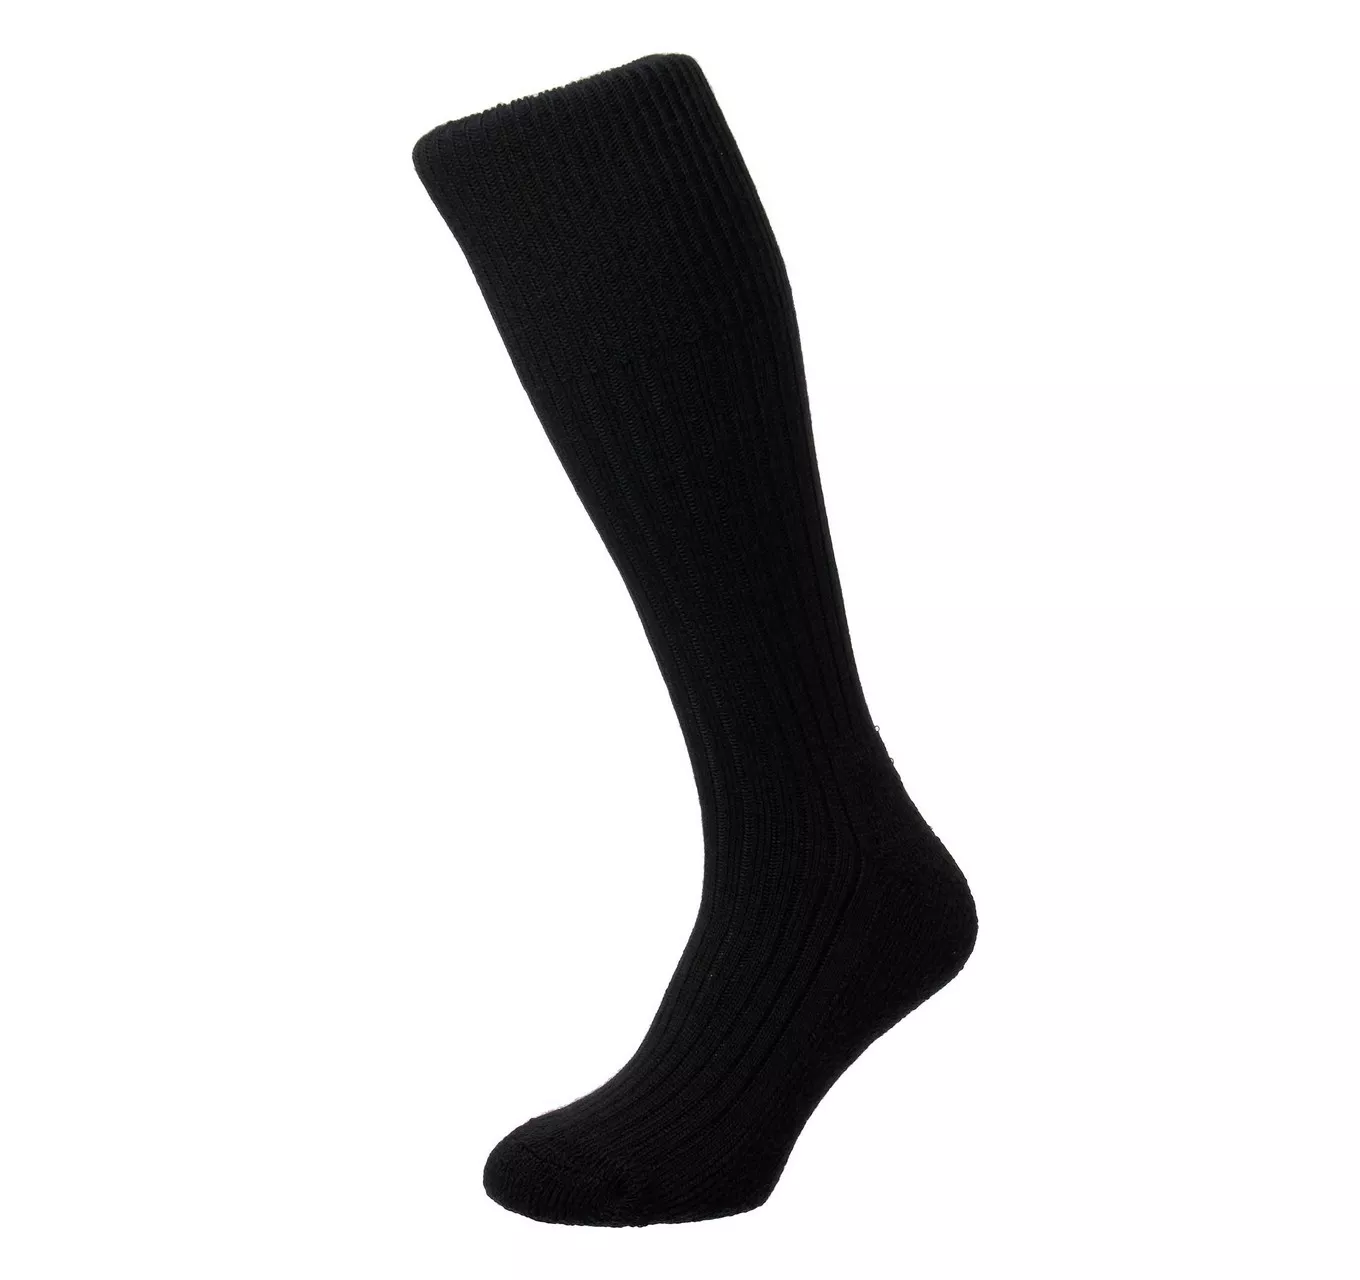 Commando Socks Black 6-11